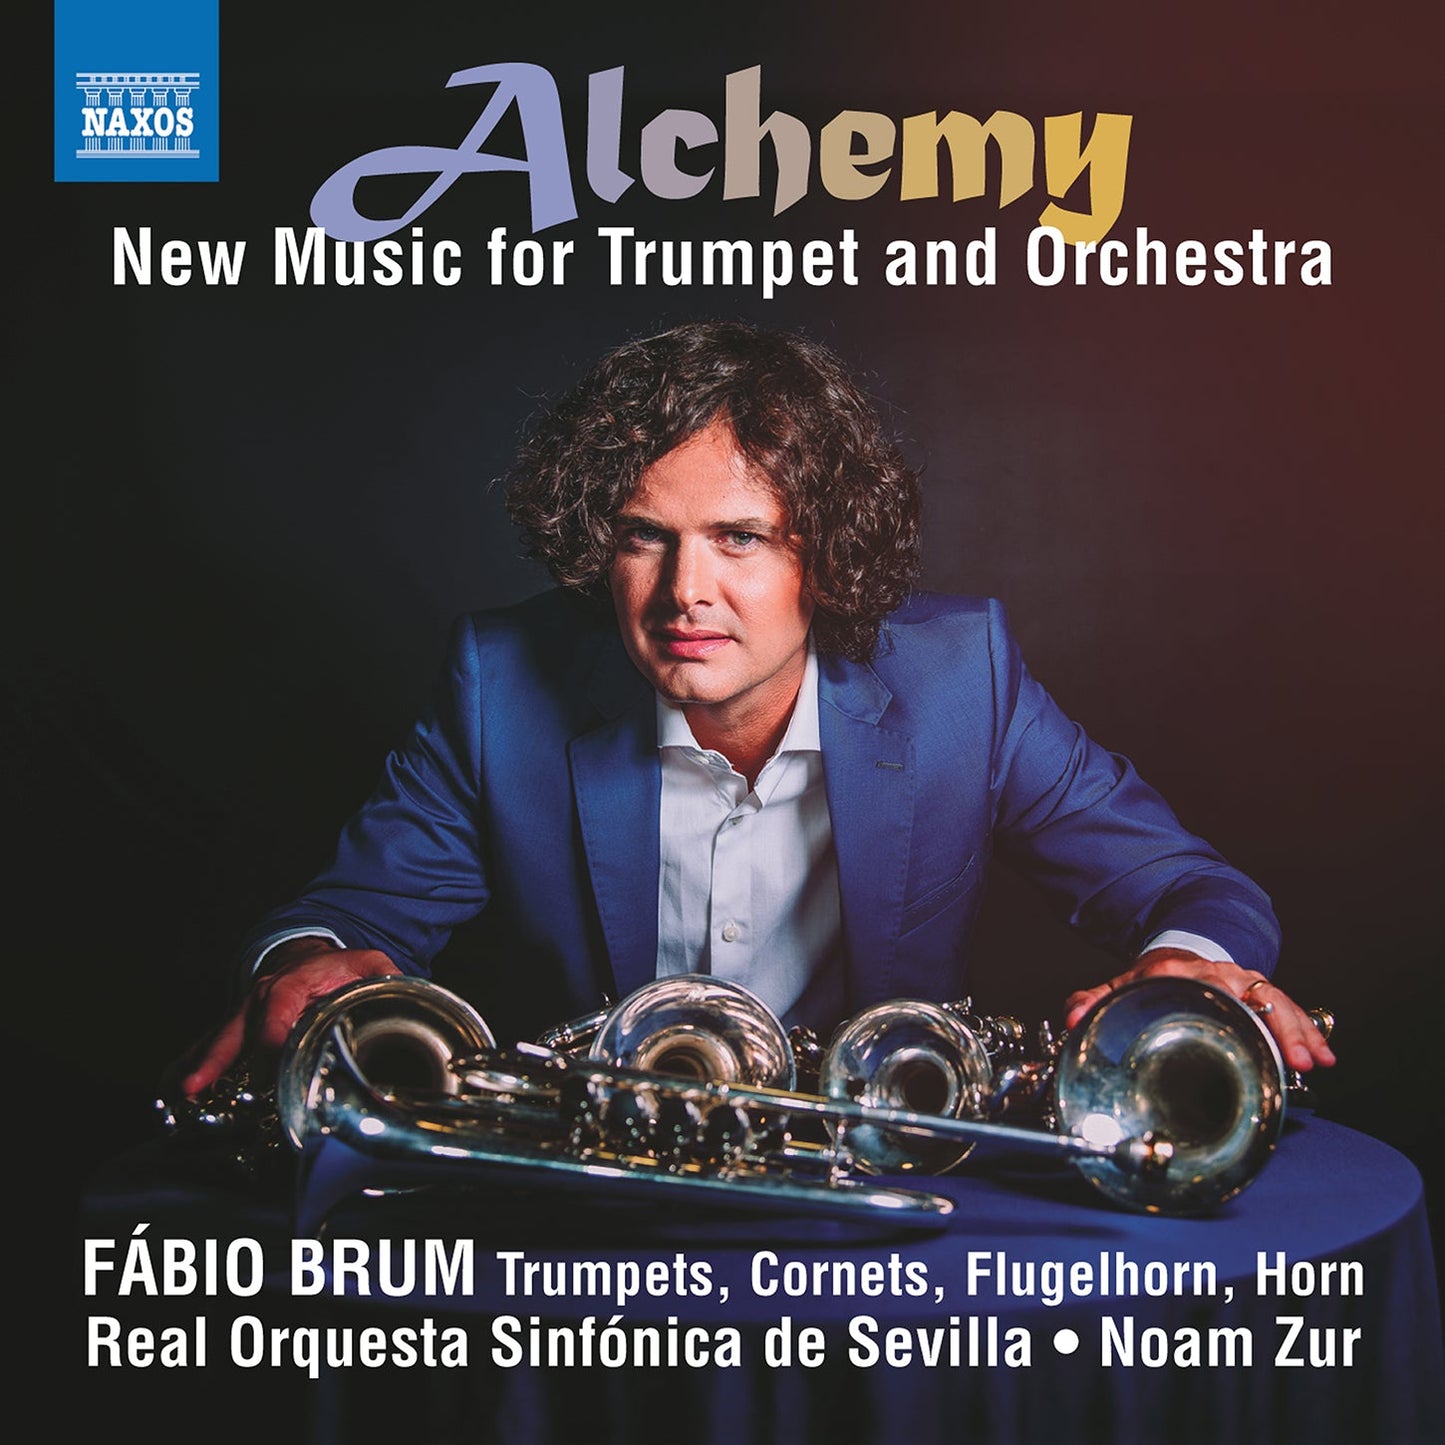 Cervo, Roberto, Tescari & Zur: Alchemy - New Music For Trump